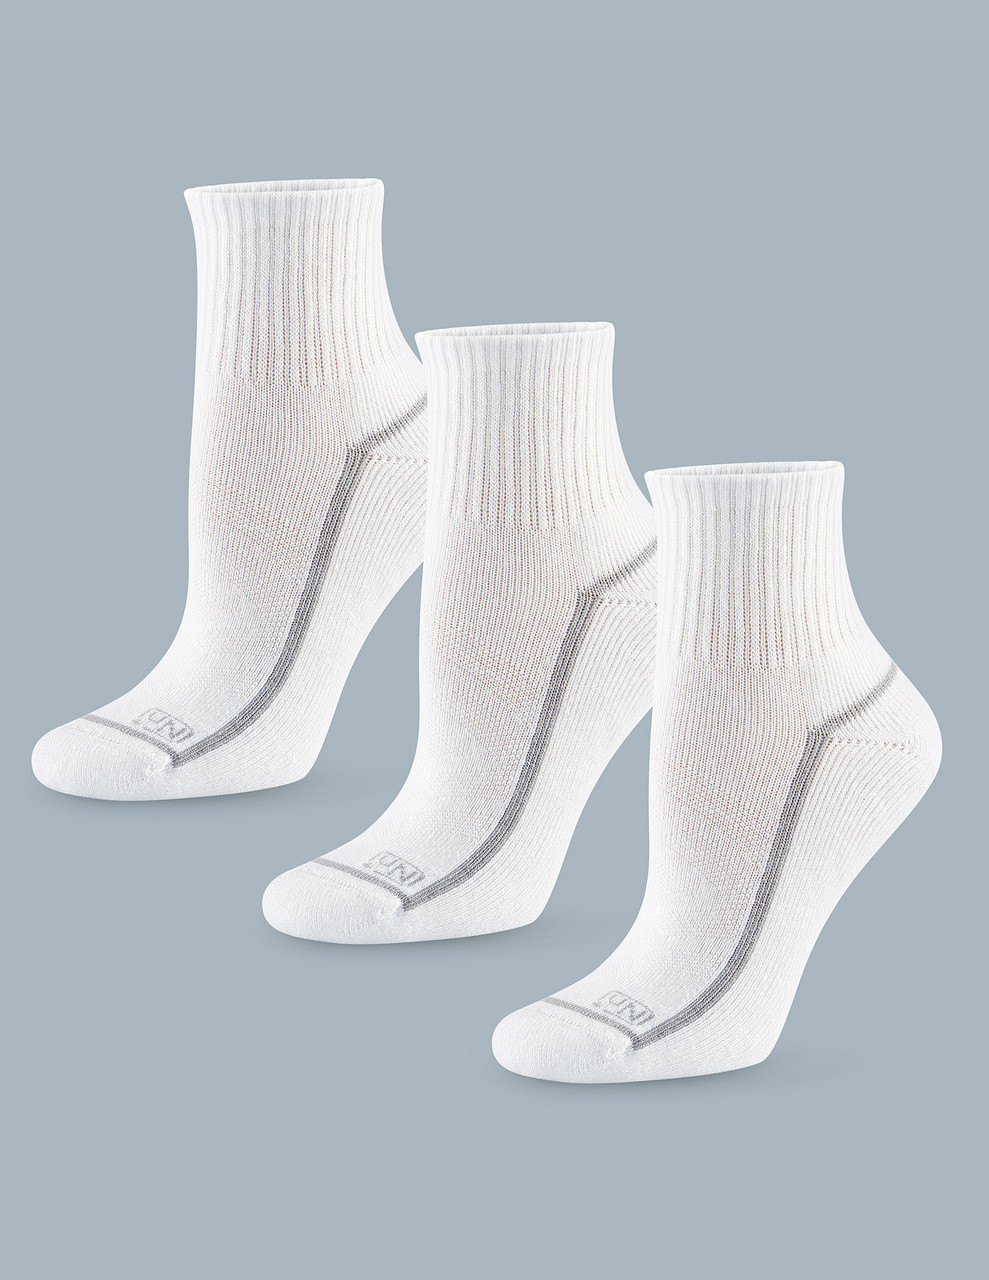 ExpanTech Stretch Tech Women's Quarter Top Socks 3 Pairs White